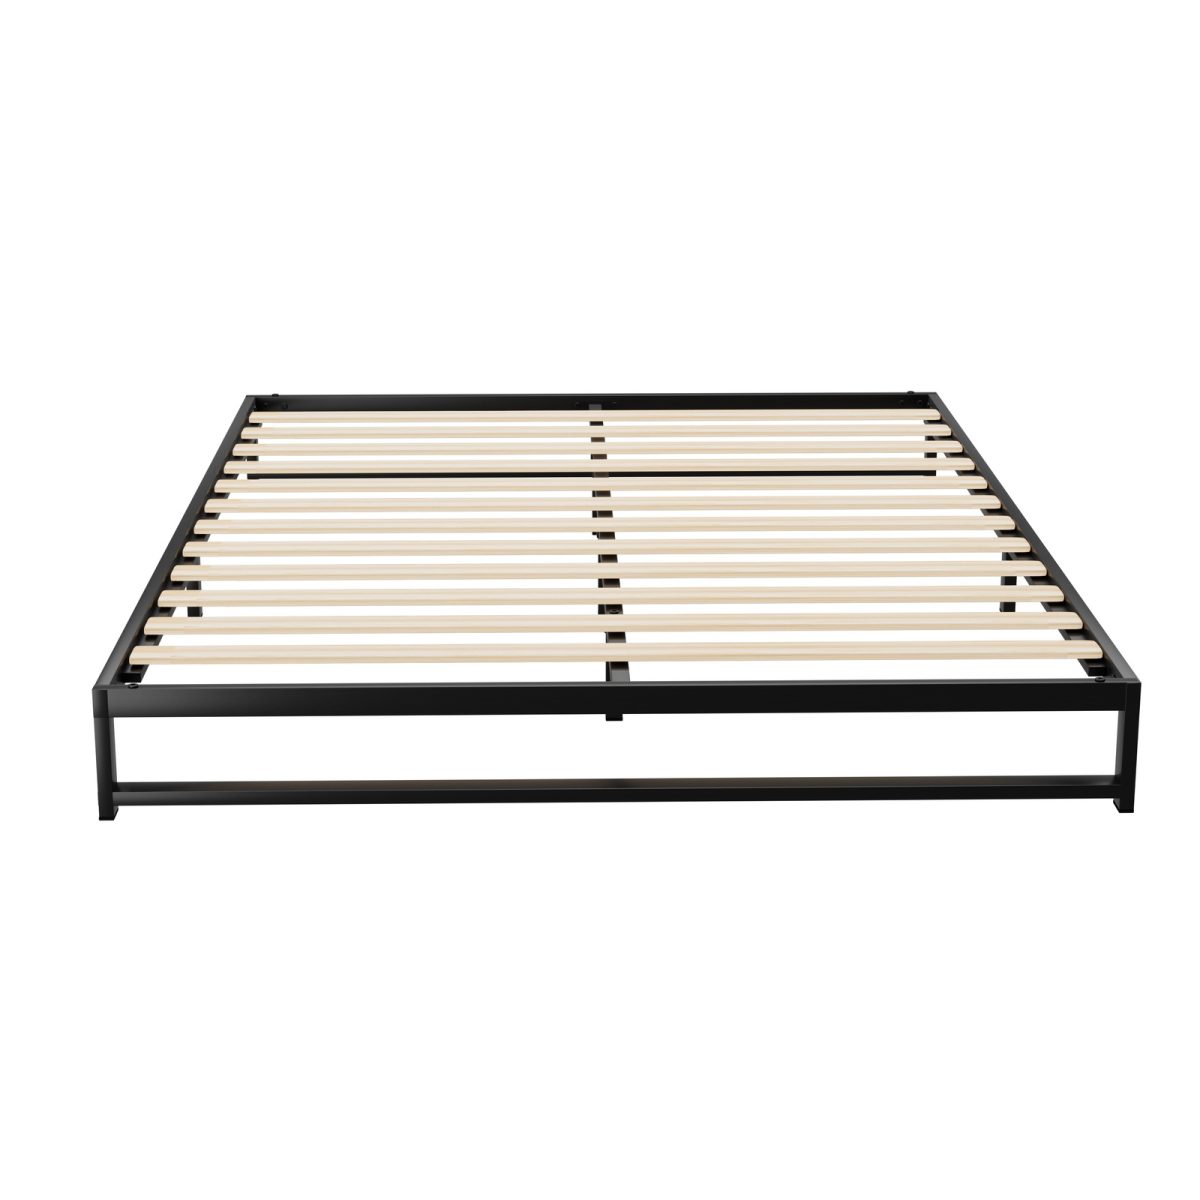 Metal Bed Frame Double Size Bed Base Mattress Platform Black BERU